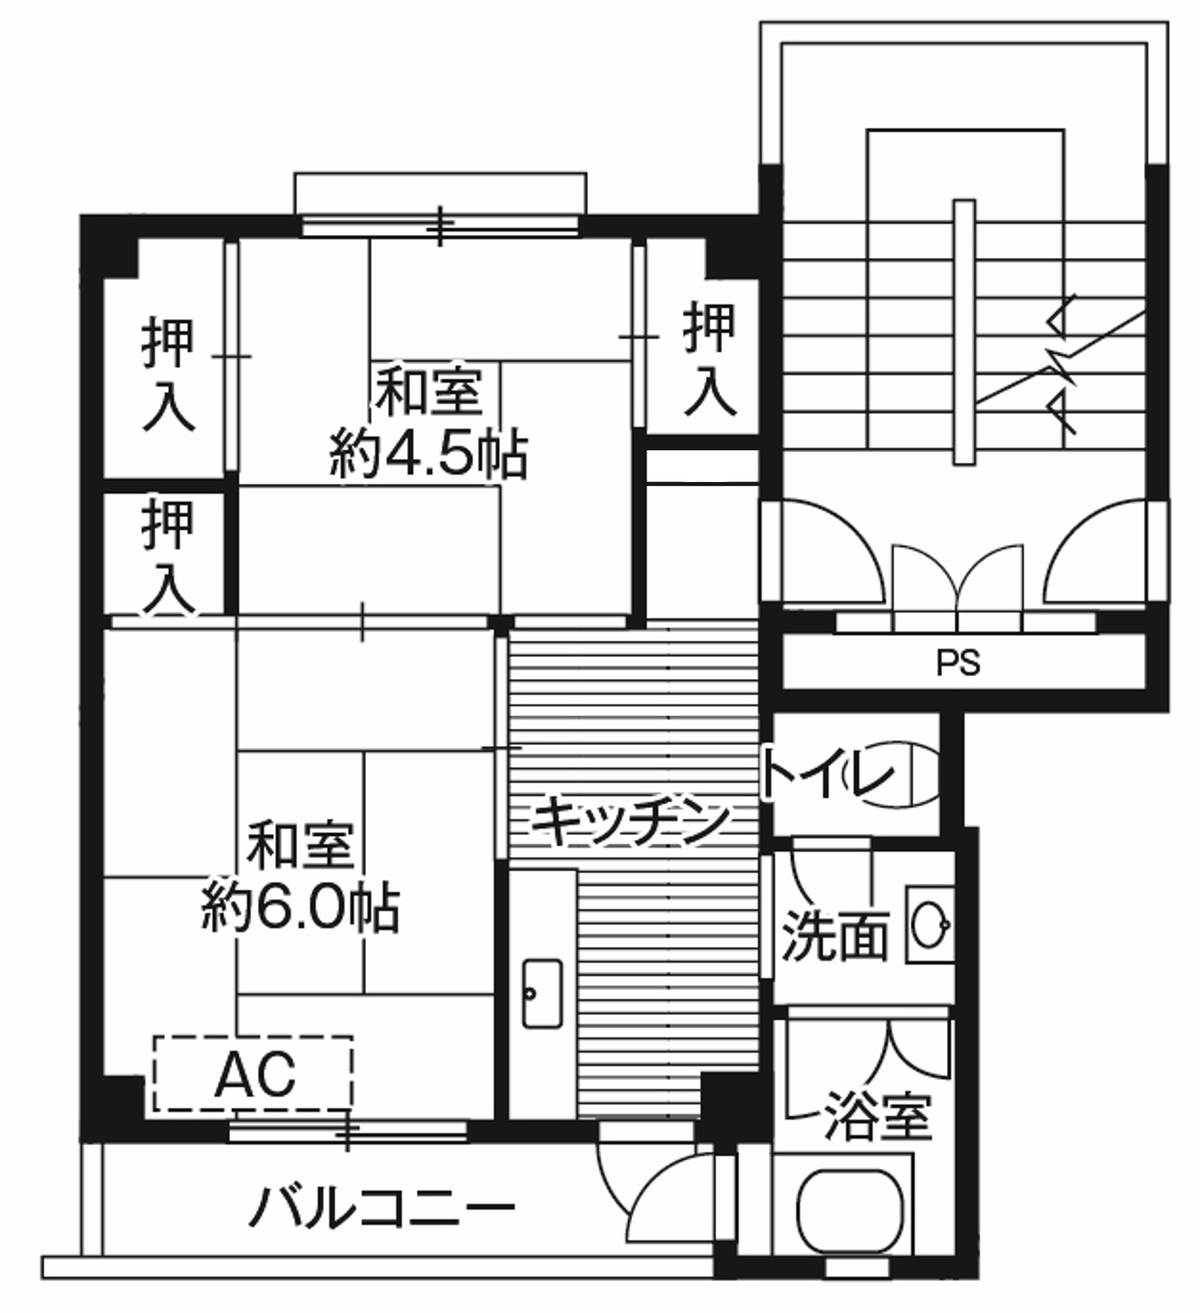 1DK floorplan of Village House Ao in Ono-shi